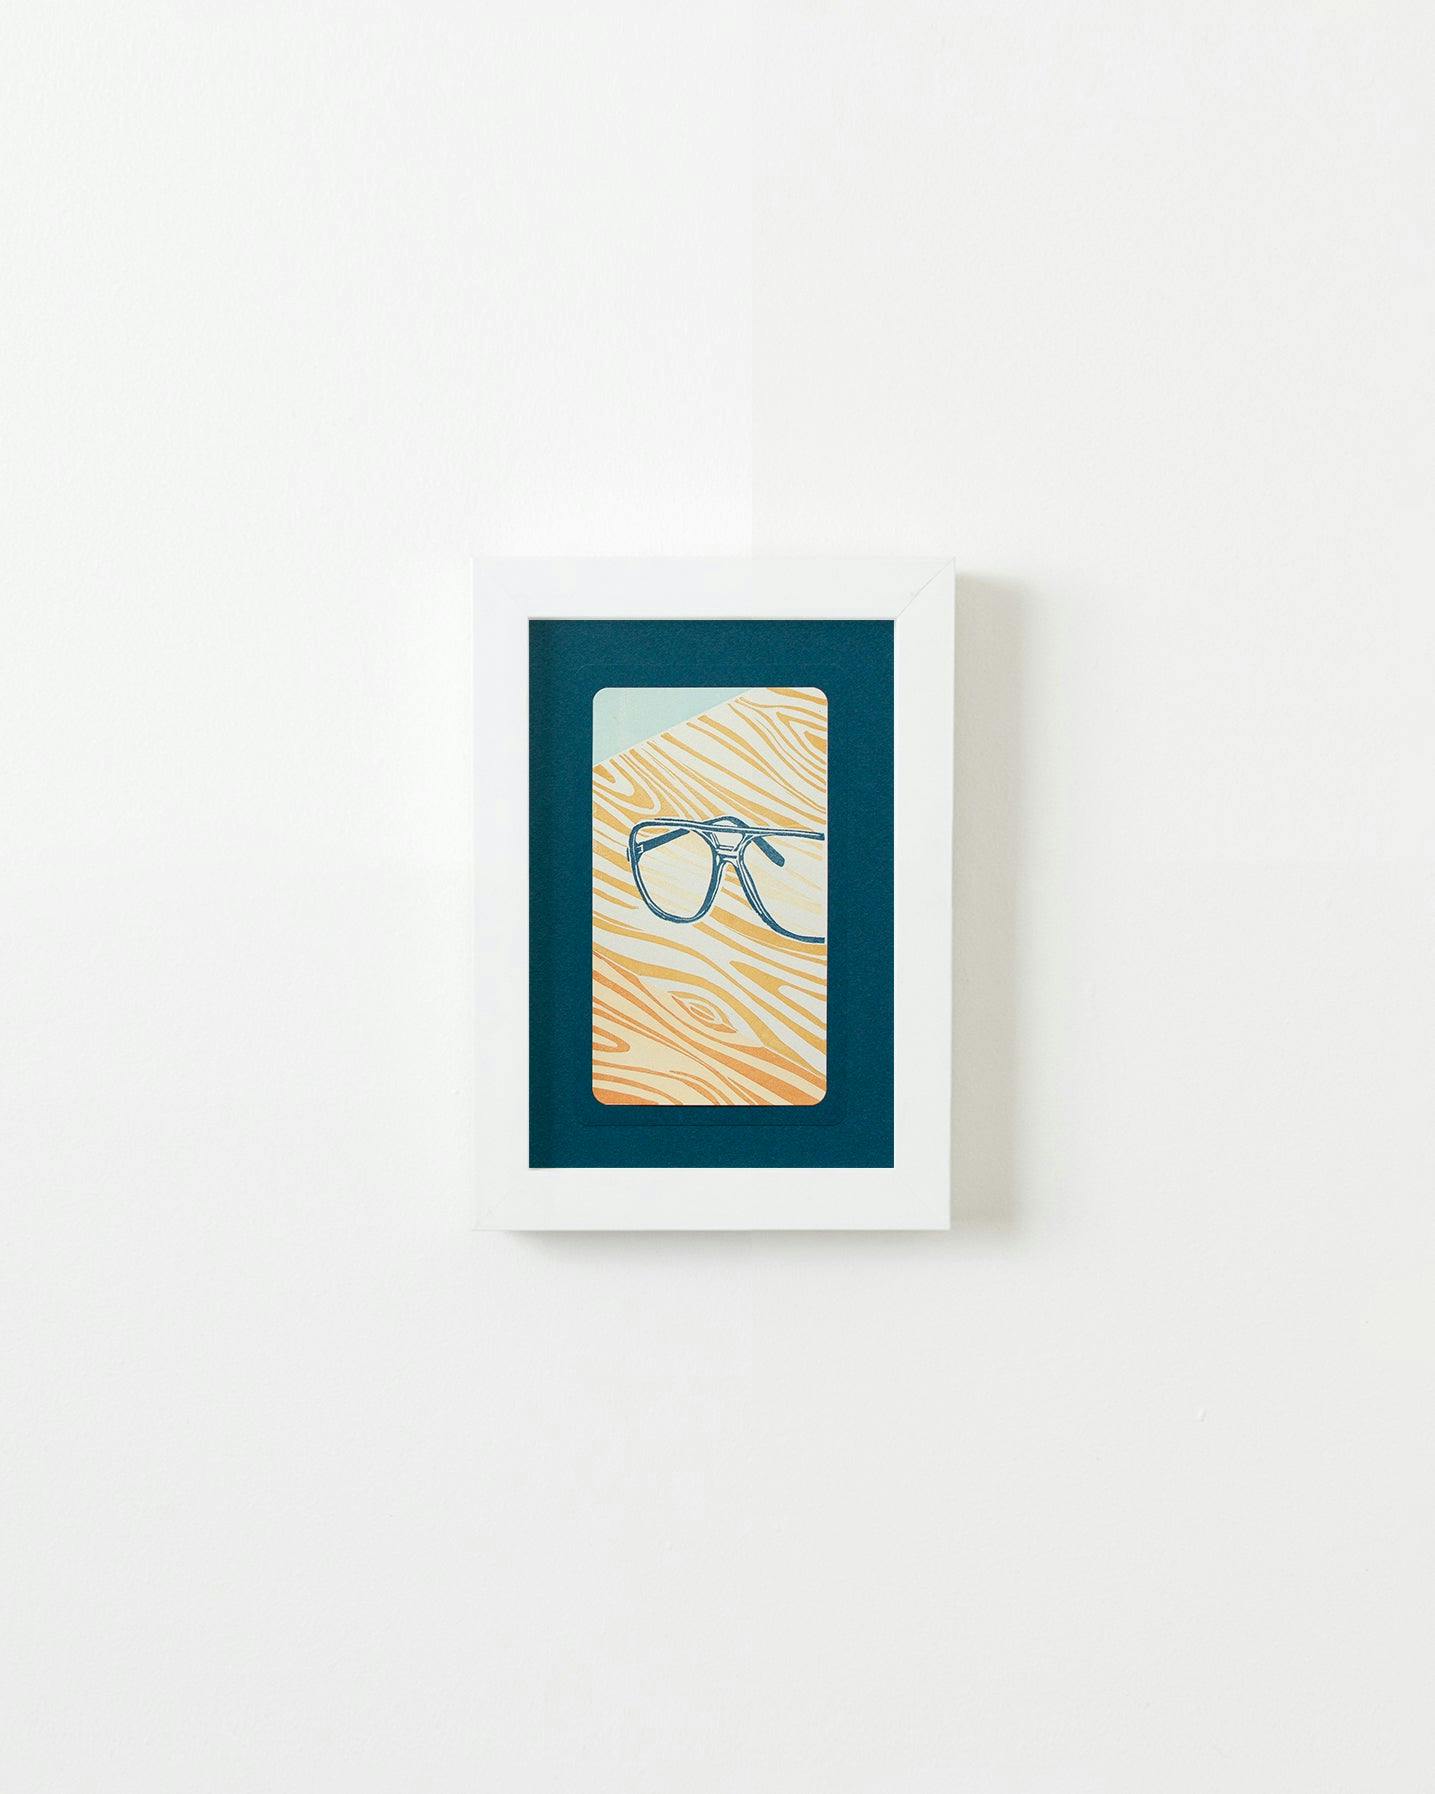 Print by Langdon Graves titled "Glasses (Home Circle - Vespertine)".